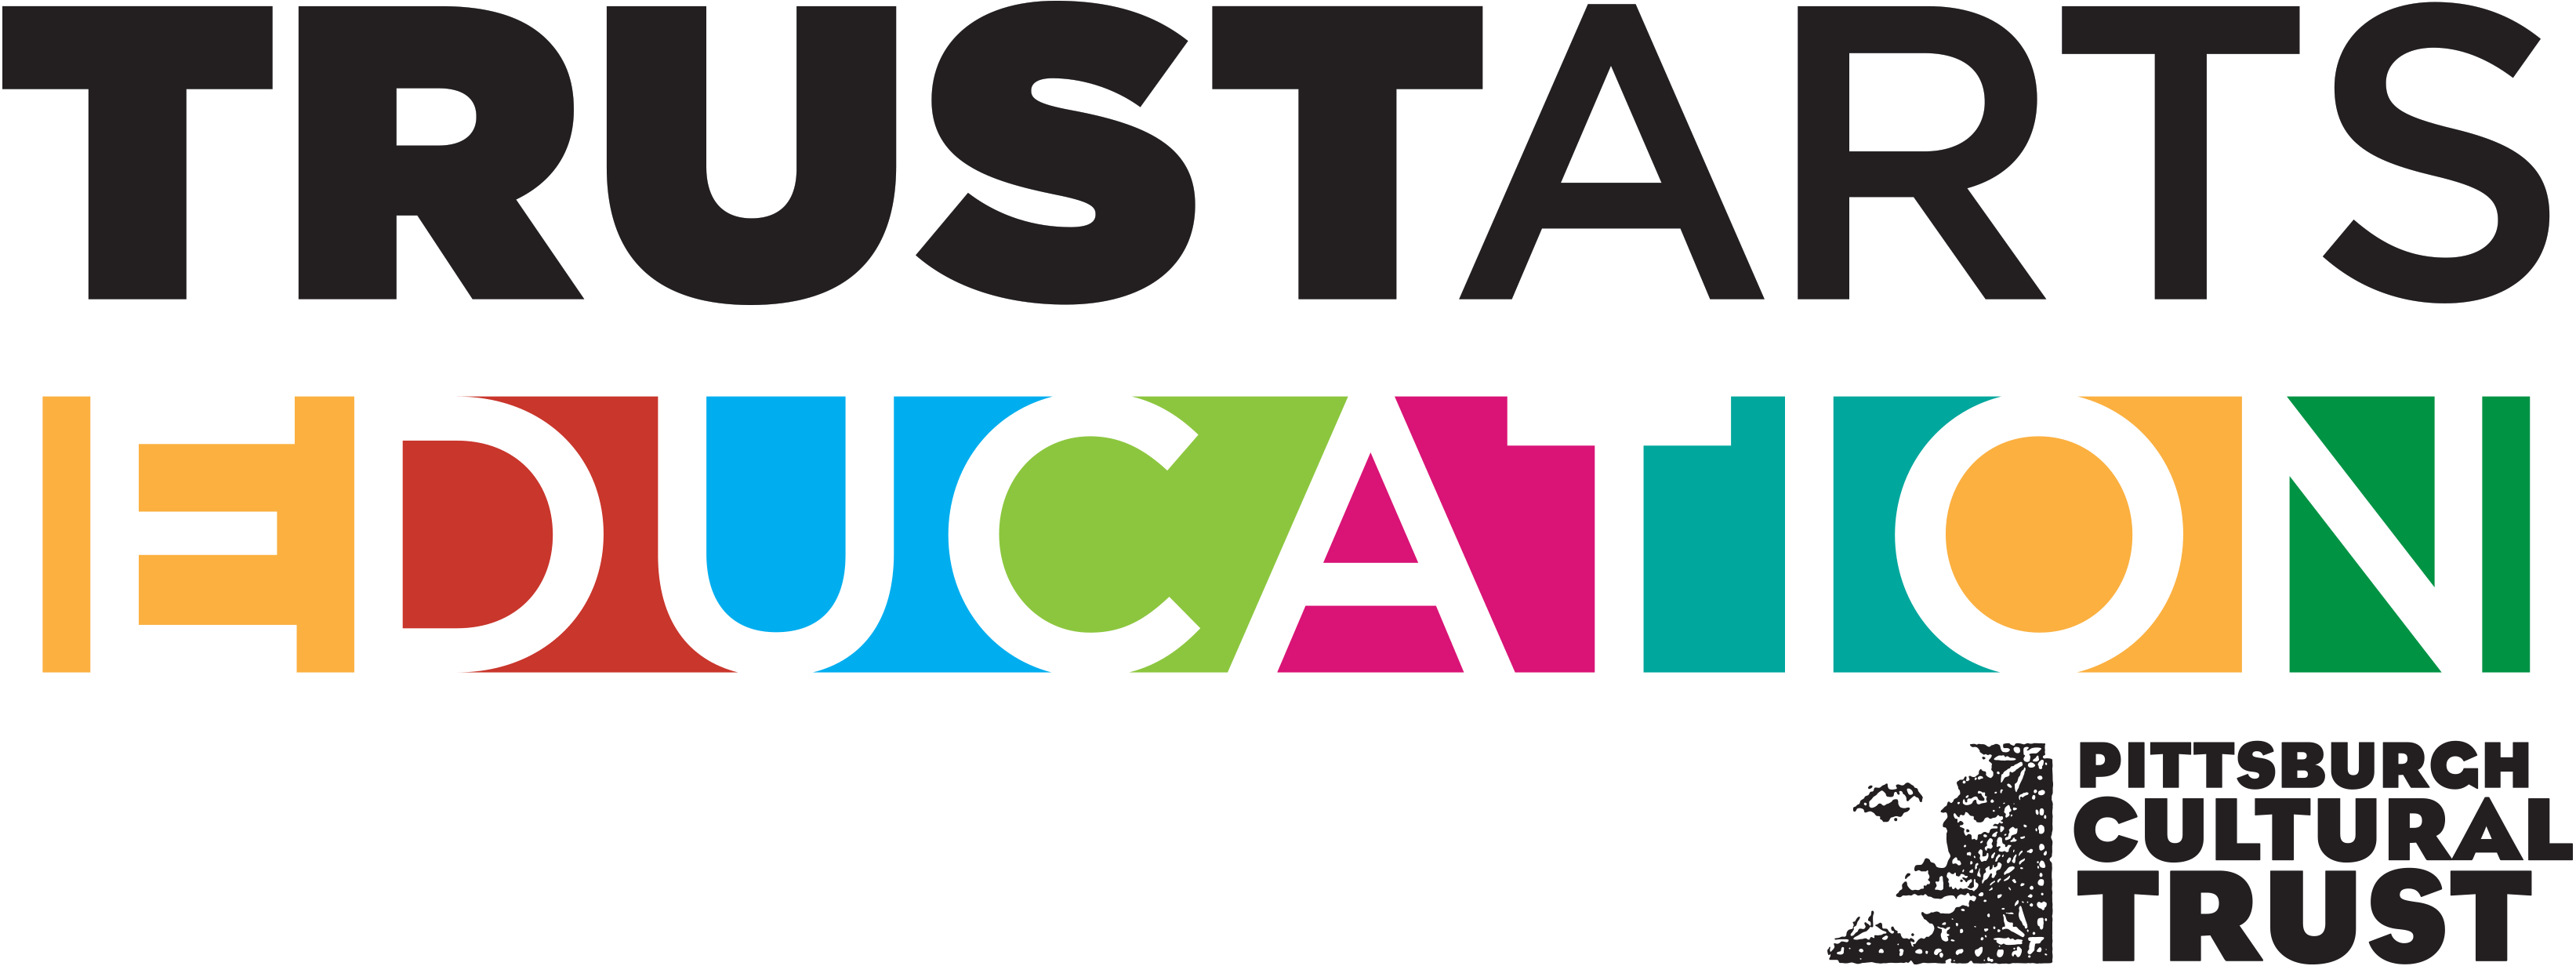 ED_trust_arts_education_logo-alternate_w-PCT